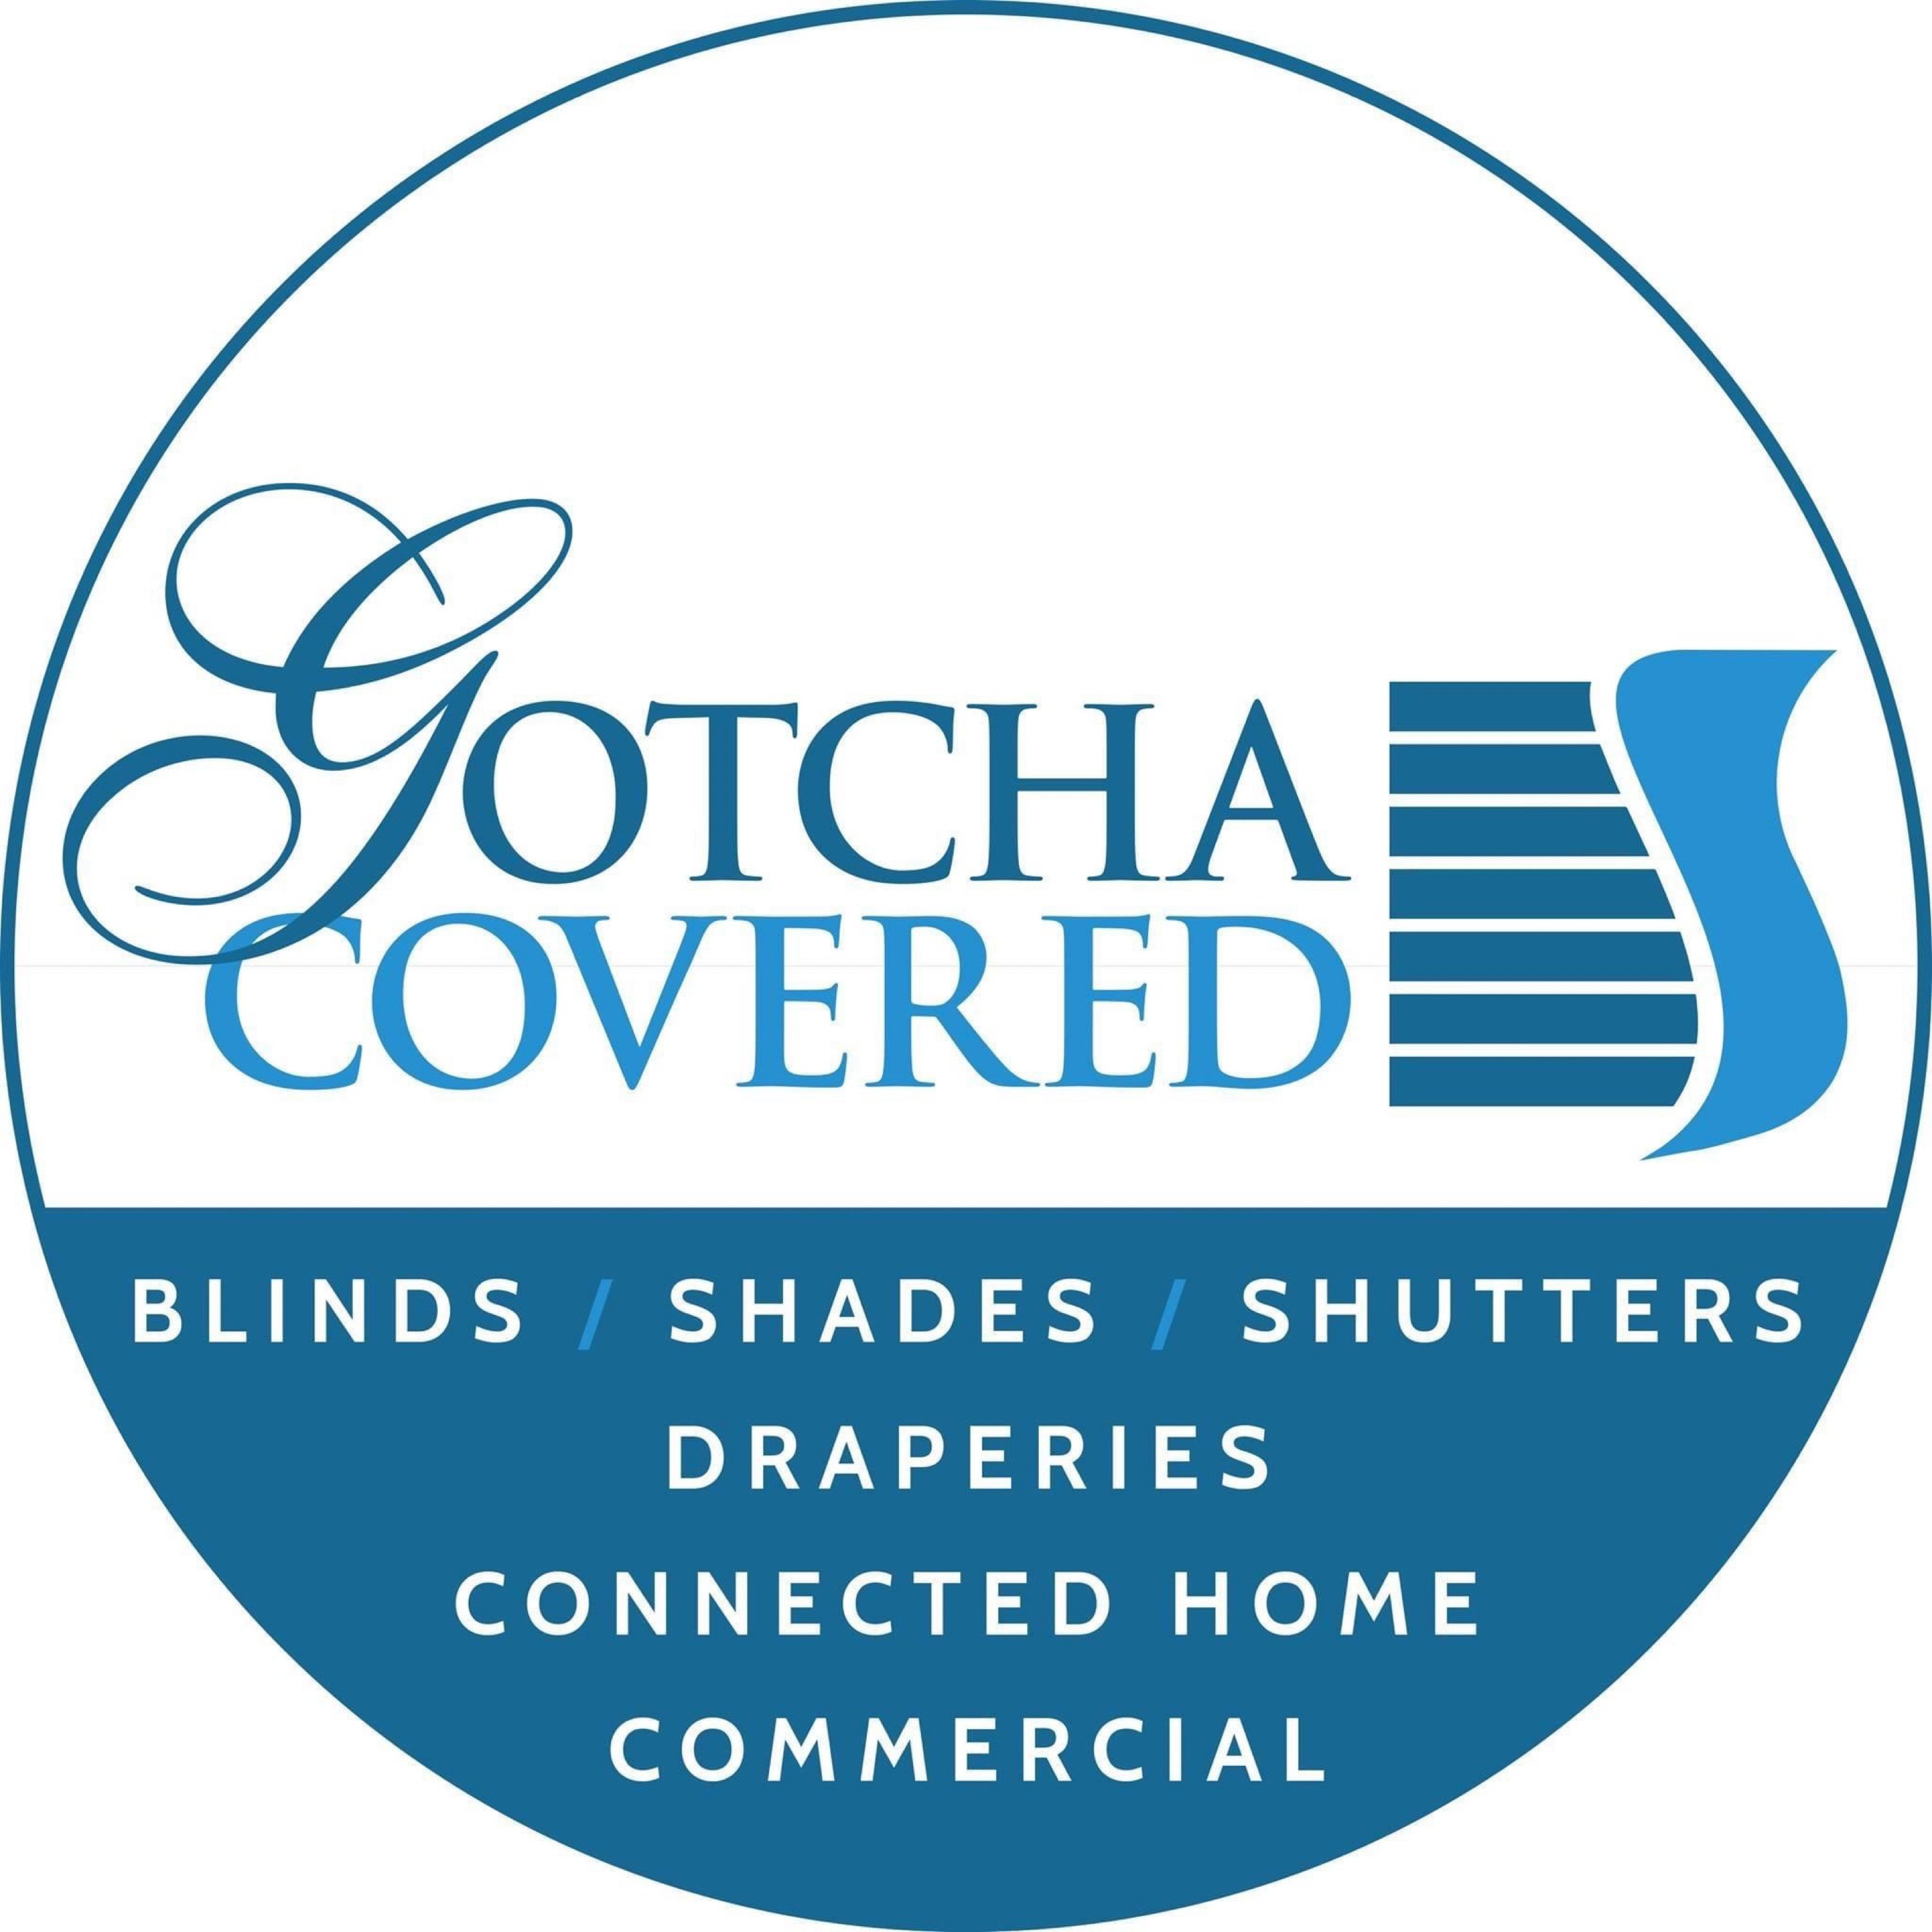 Gotcha Covered Avon Logo